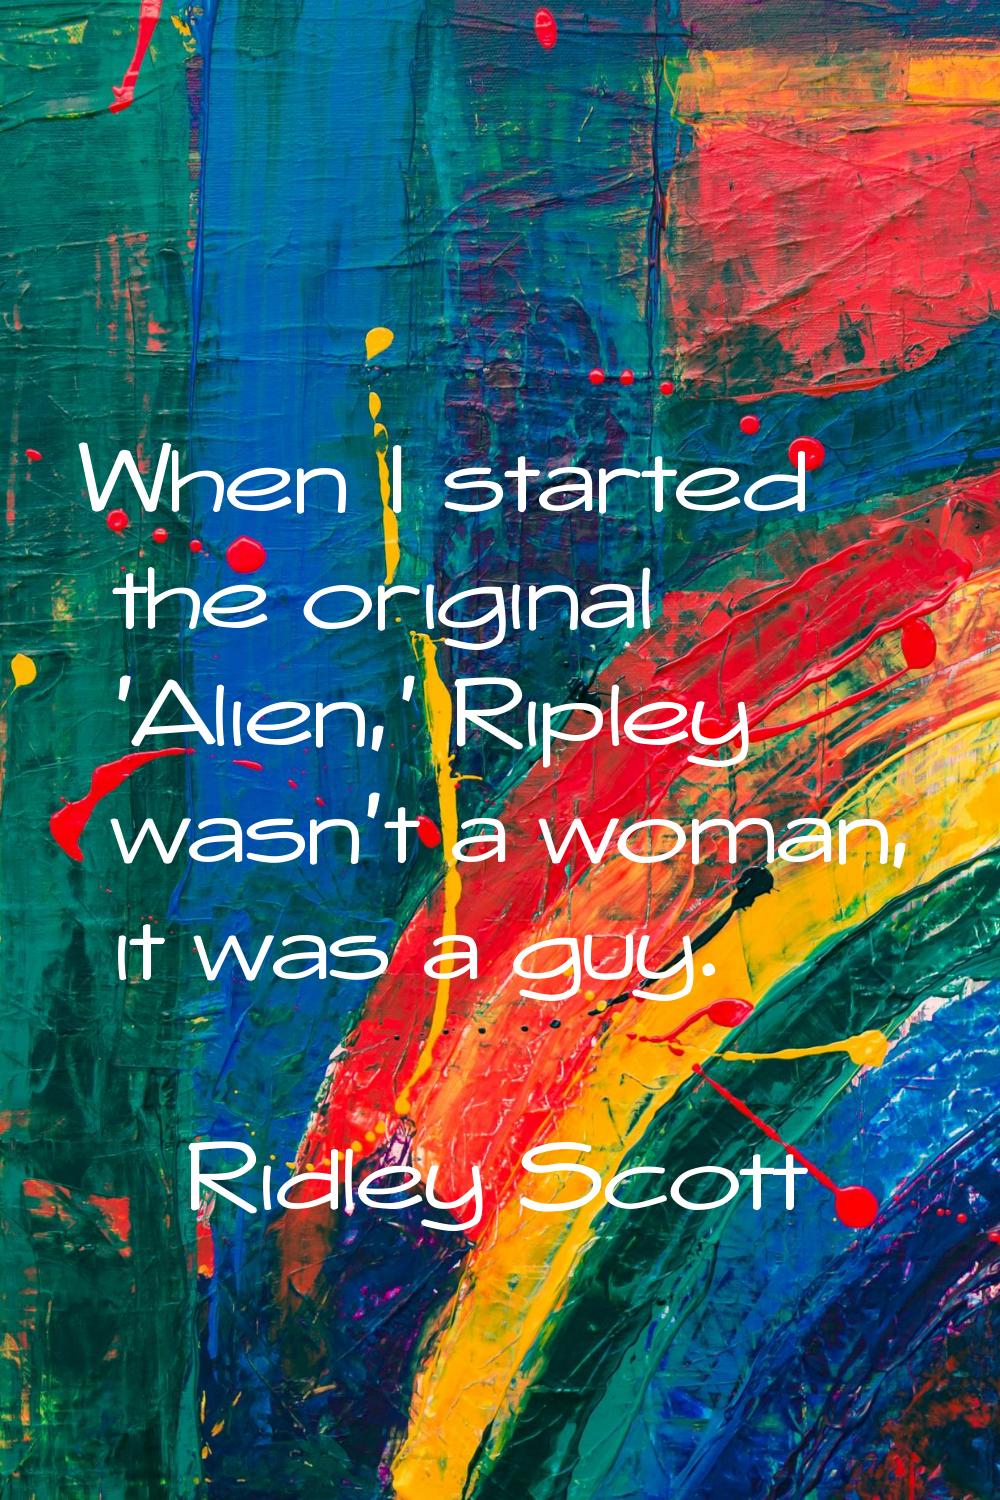 When I started the original 'Alien,' Ripley wasn't a woman, it was a guy.